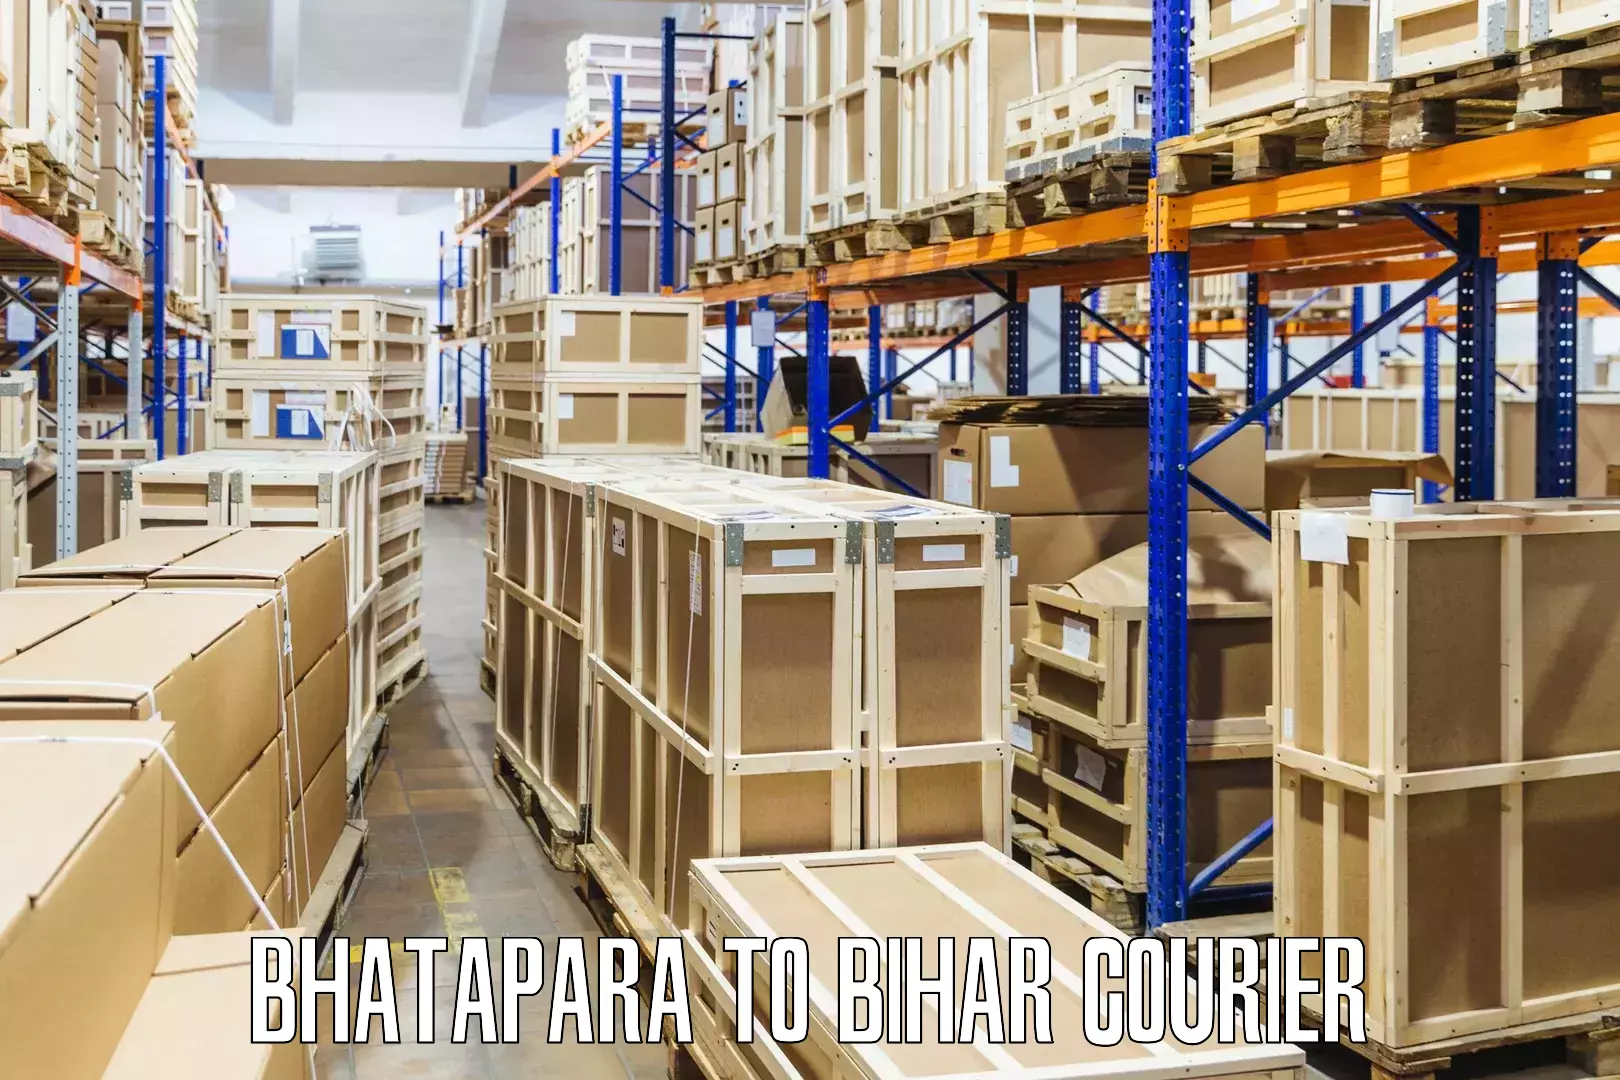 Global courier networks Bhatapara to Bihar